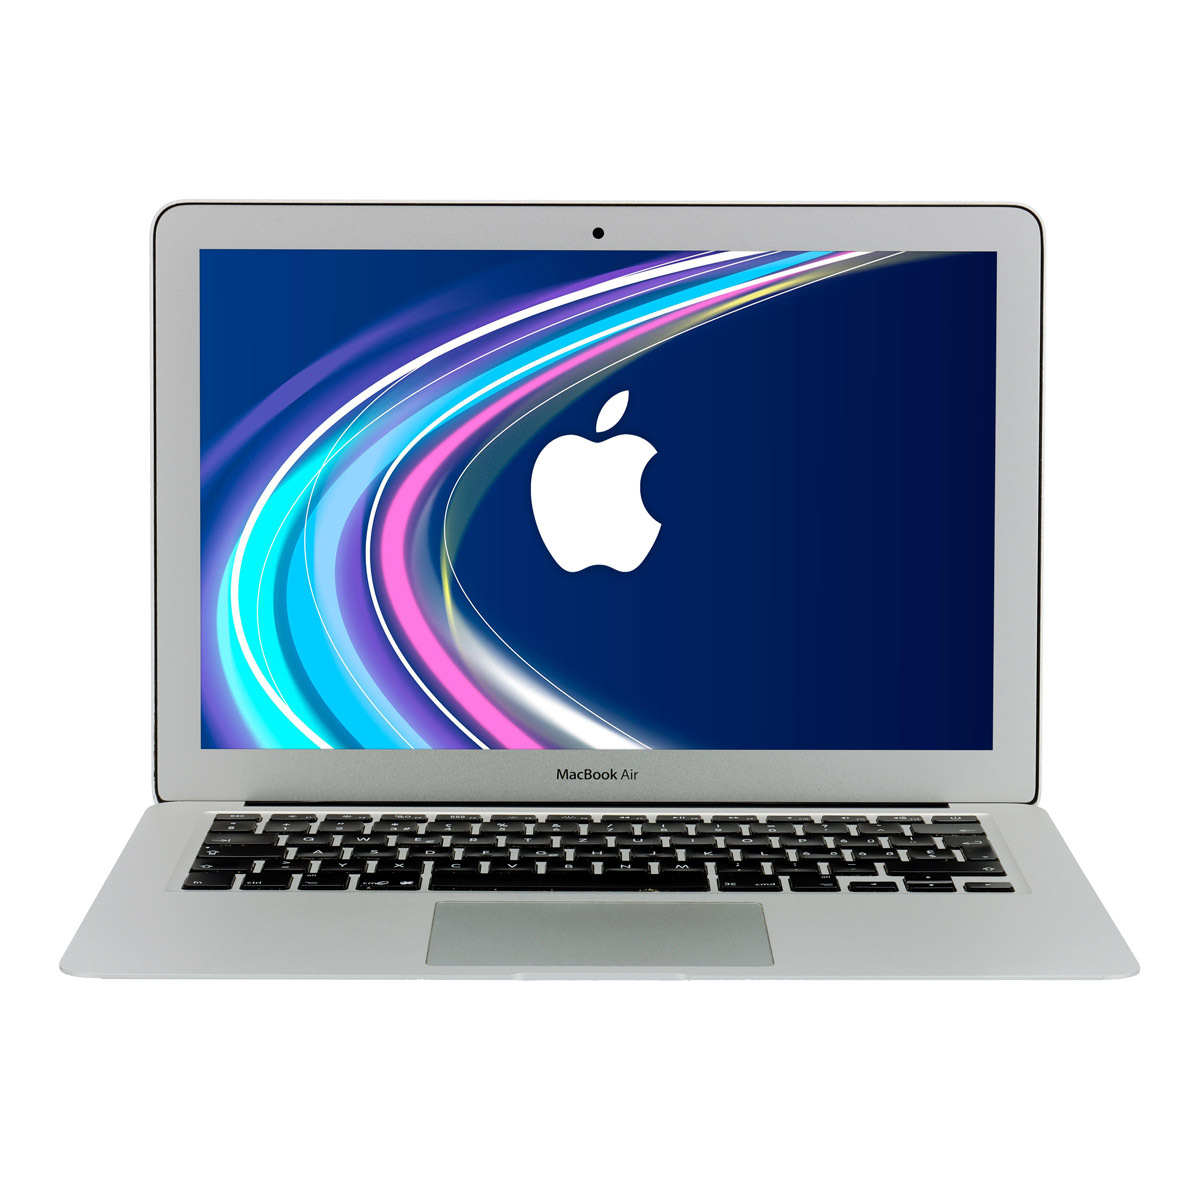 Apple MacBook Air 13' Mid 2013 Core i7 4650U 8 GB 250 GB SSD Webcam A